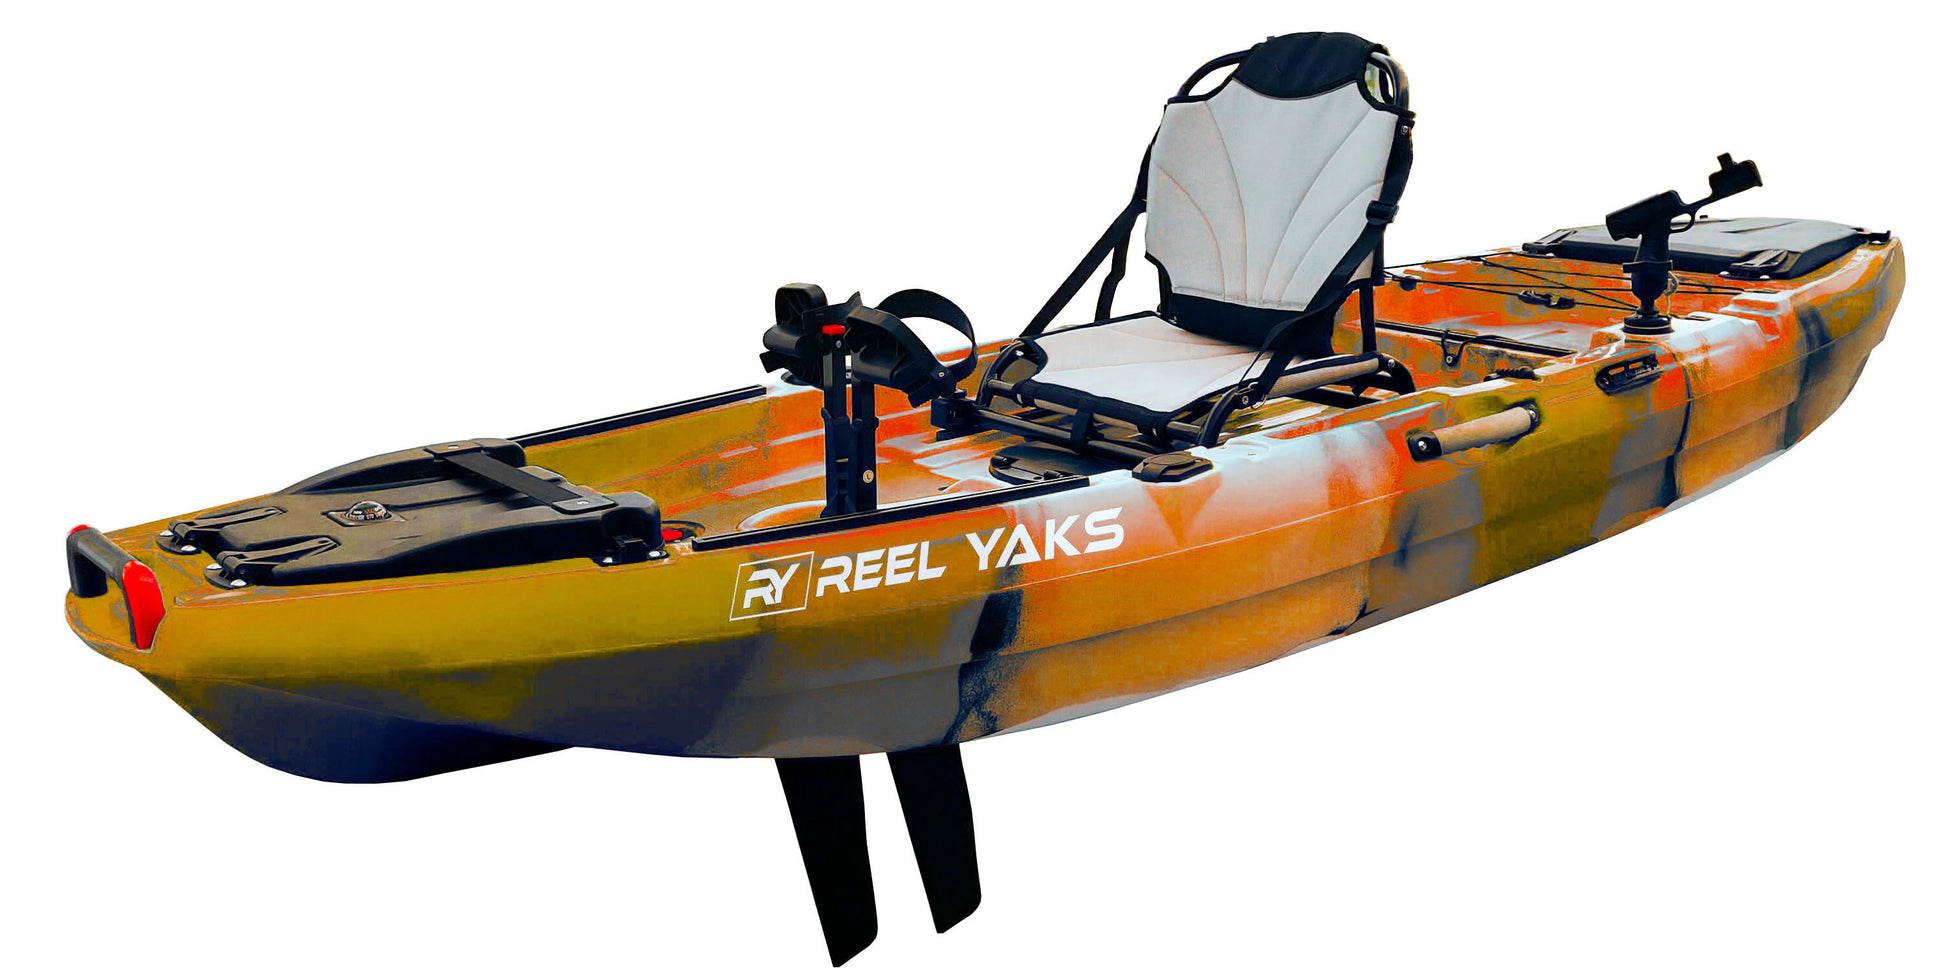 10' Reach Fin Drive Fishing Kayak, Adults youths kids